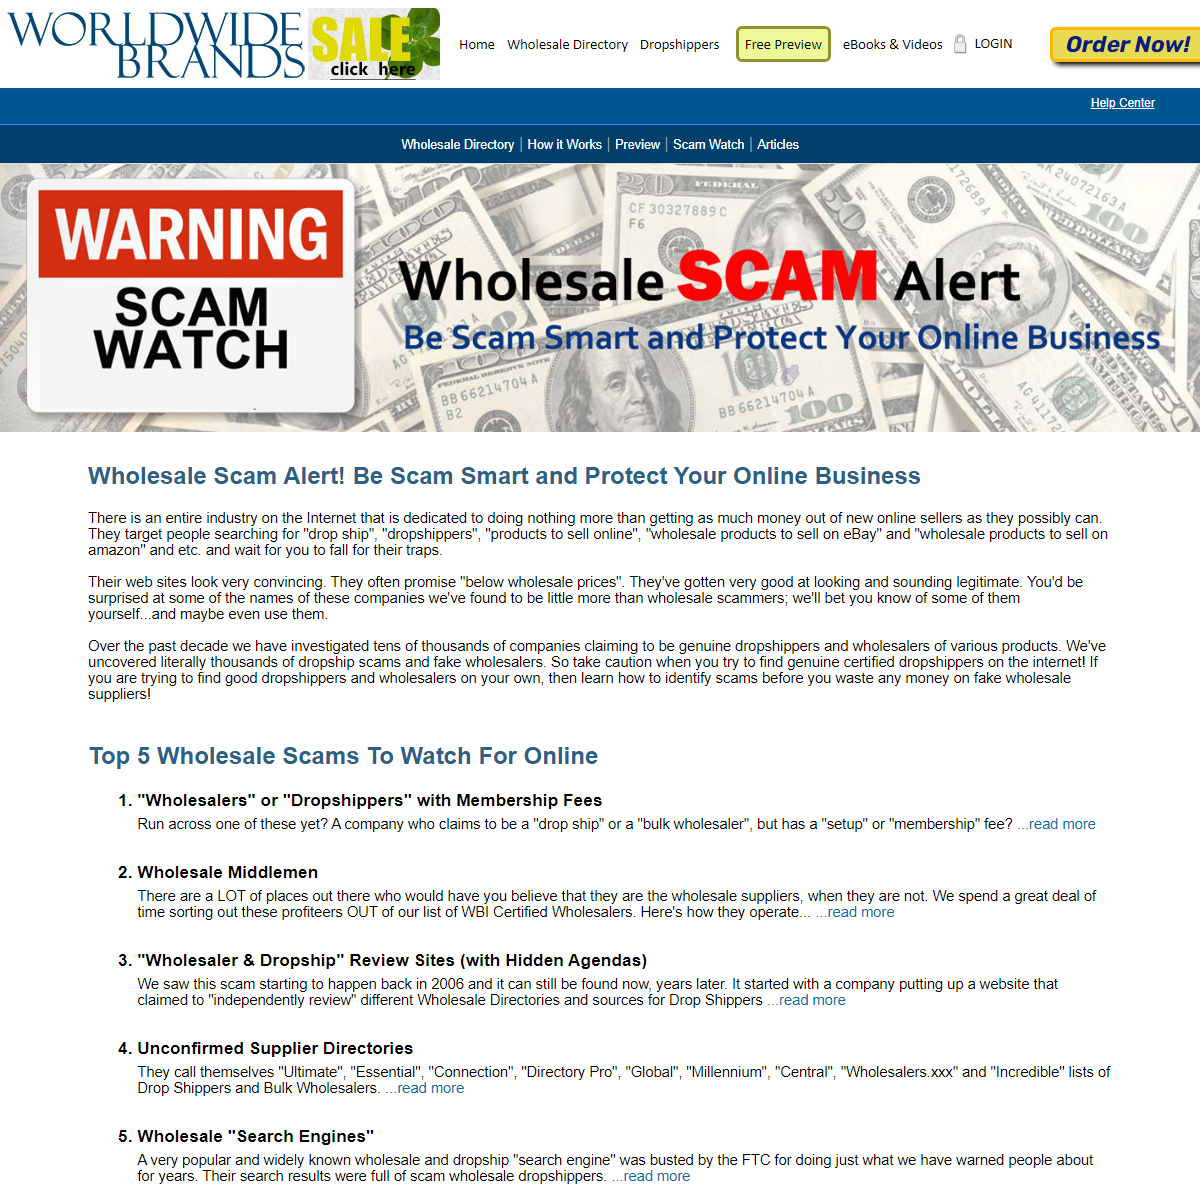 Worldwide Brands Wholesale Scam Watch